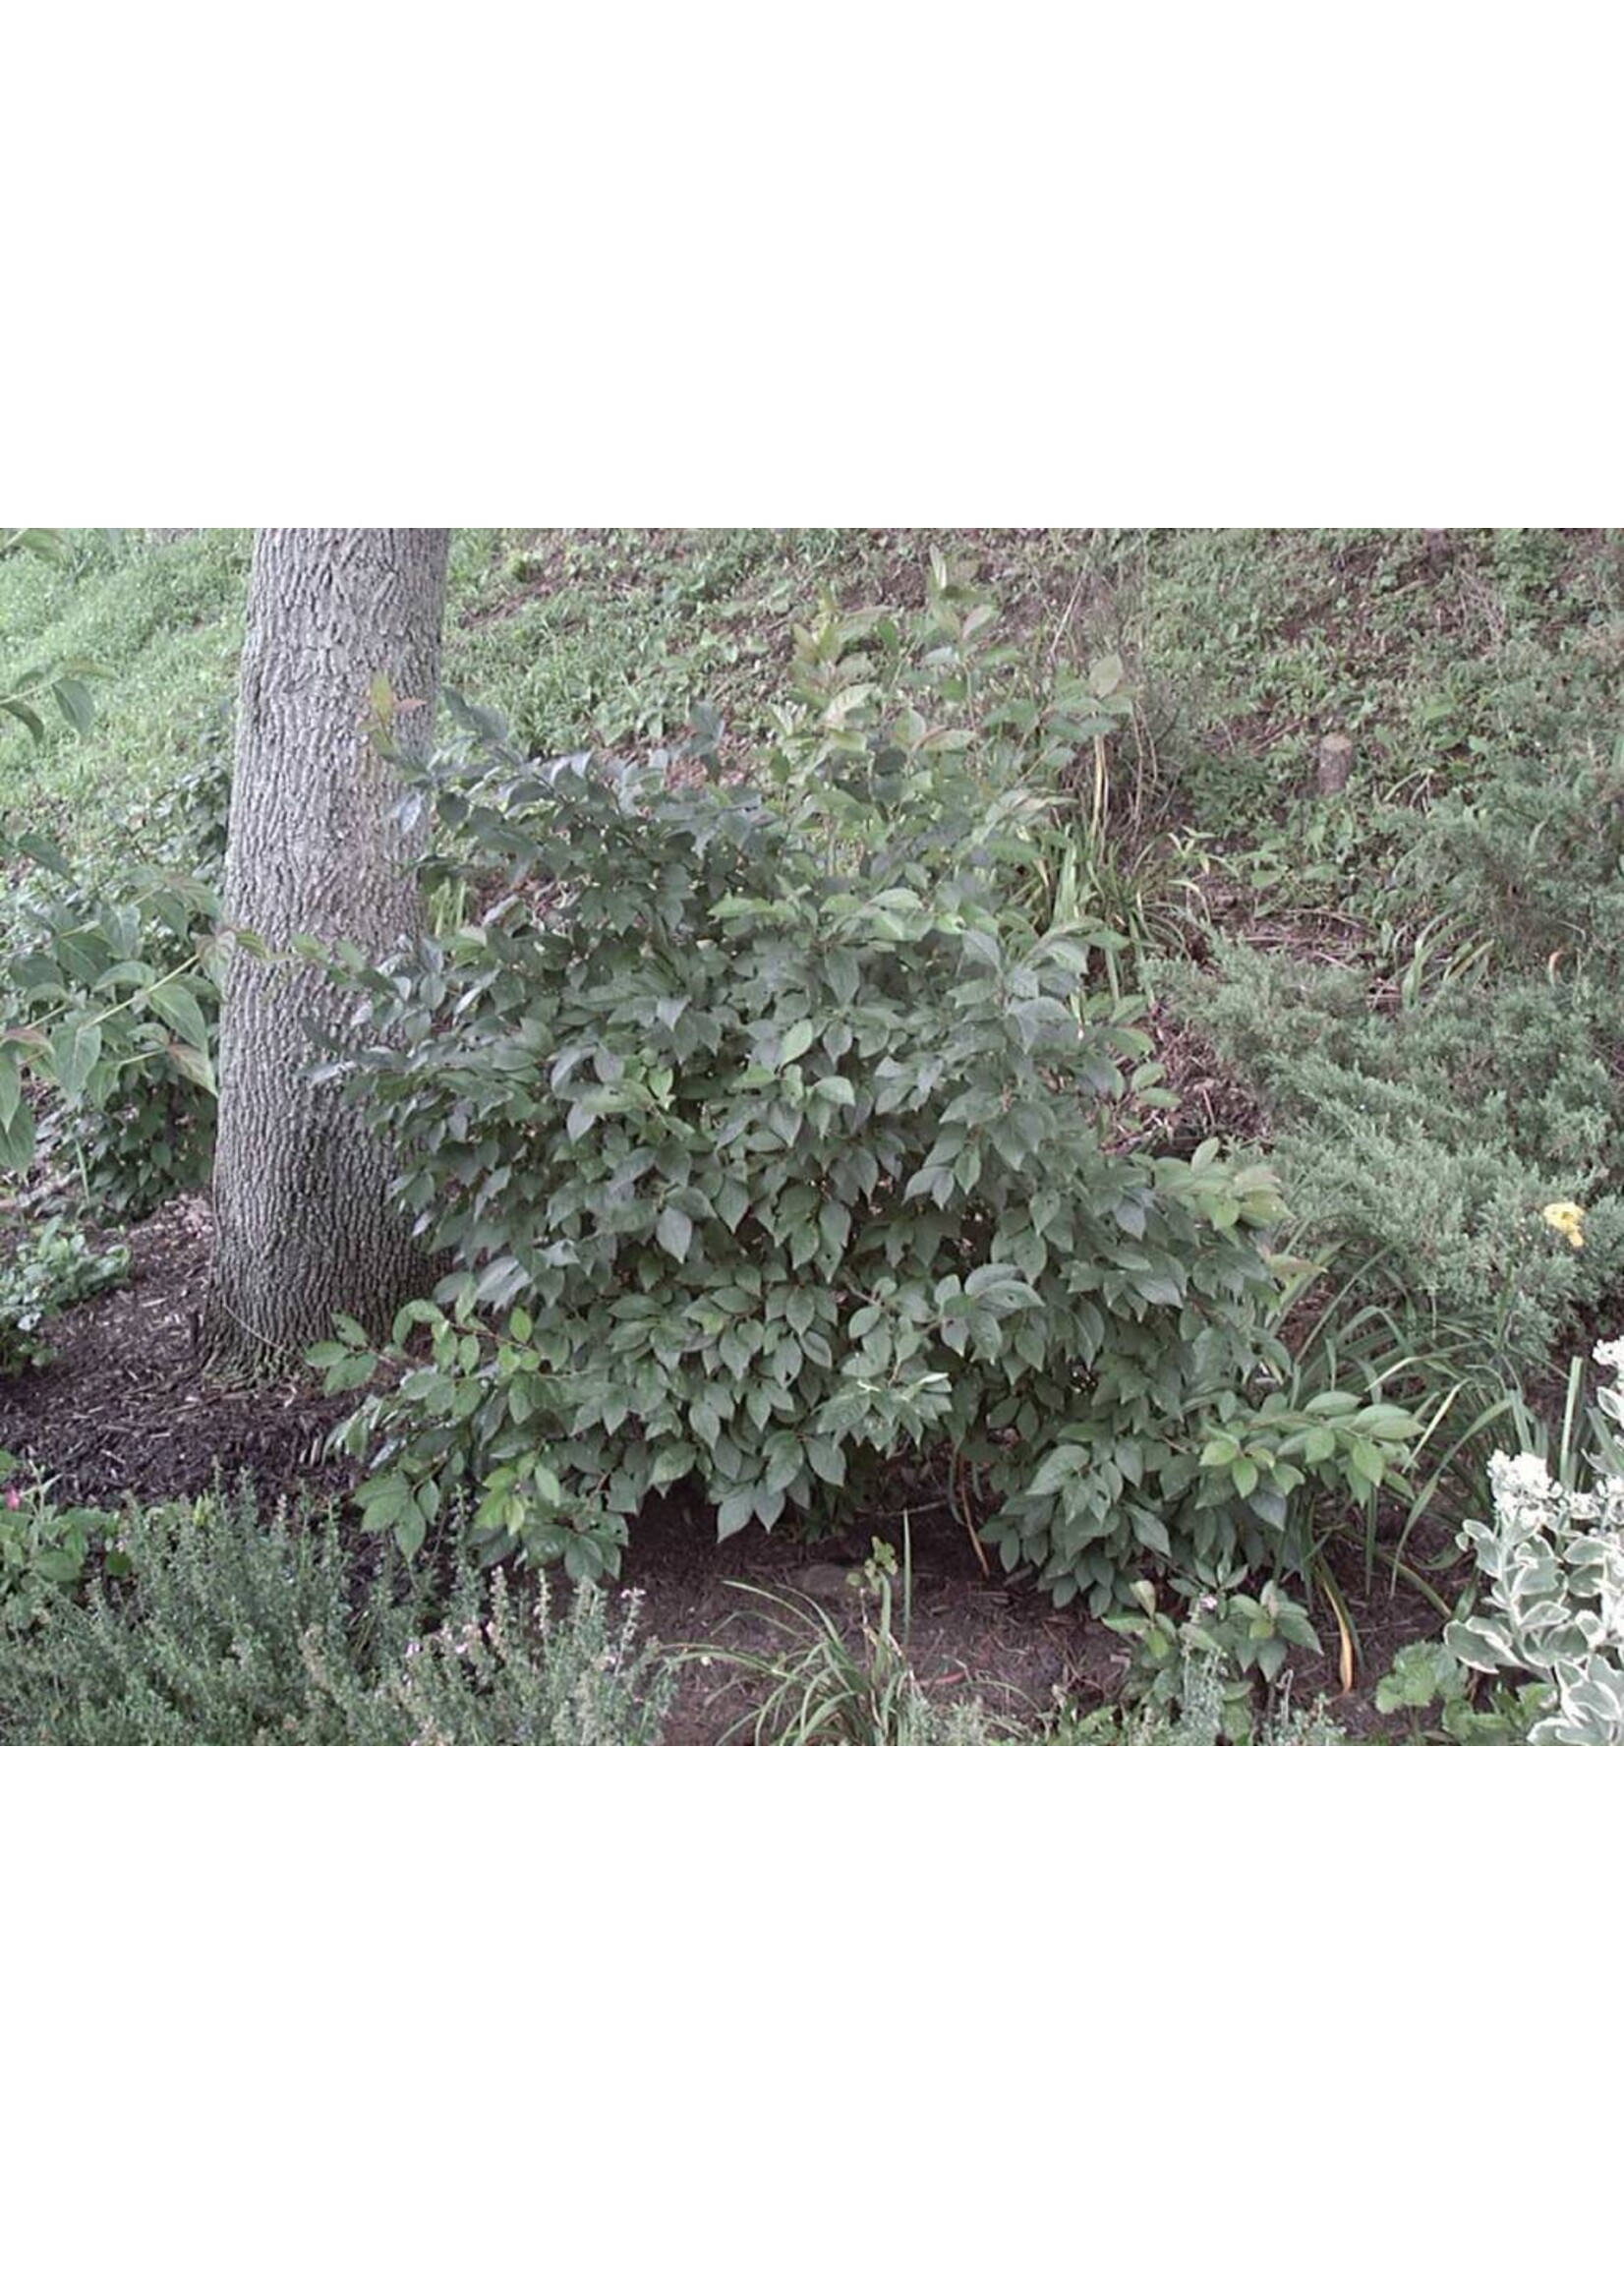 Rain Garden Ilex vert. Holly - Winterberry, #3